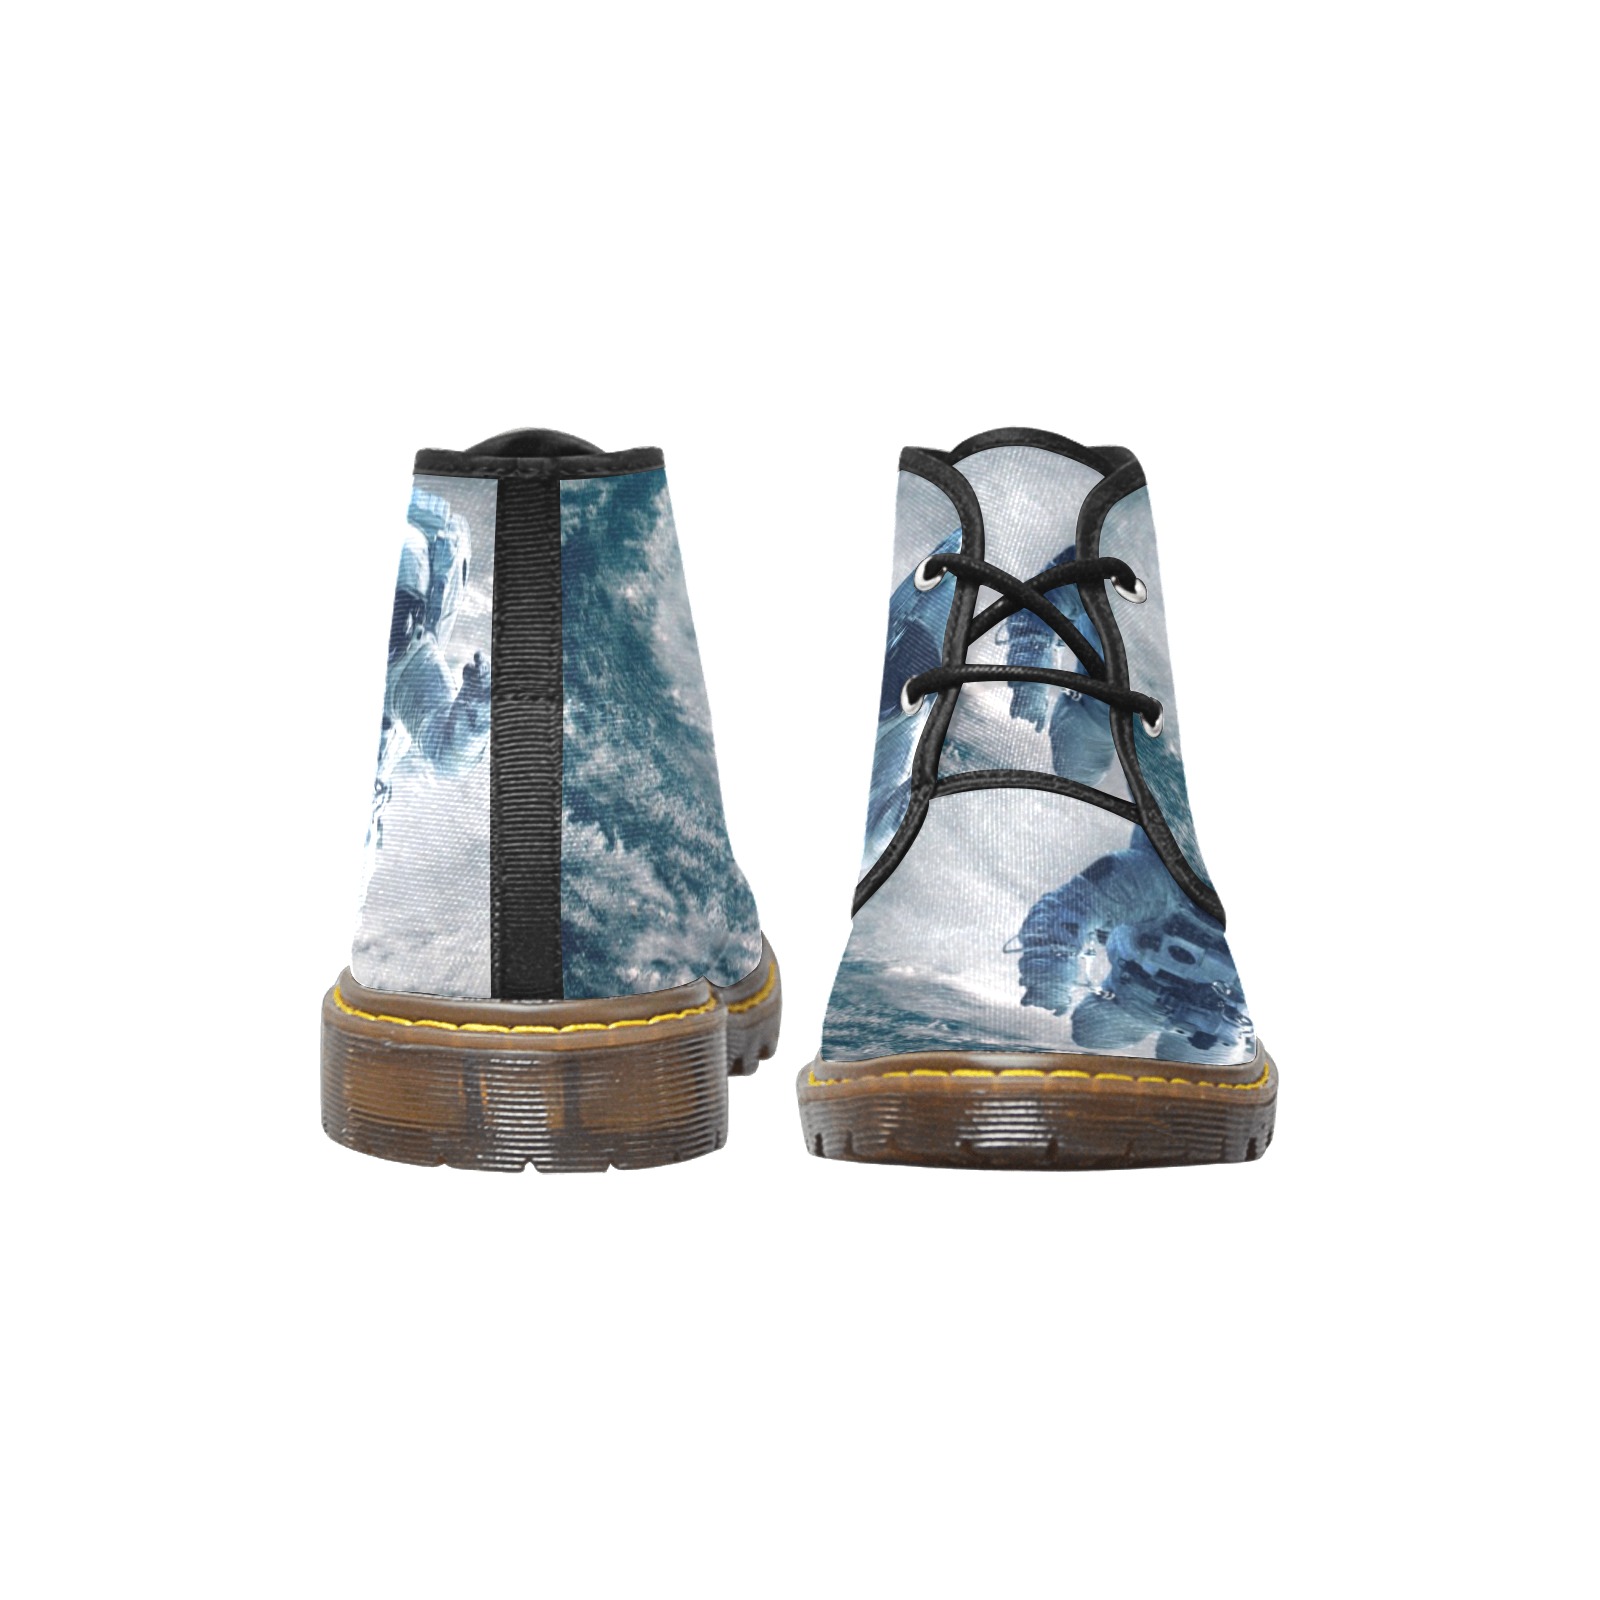 CLOUDS 5 ASTRONAUT Men's Canvas Chukka Boots (Model 2402-1)